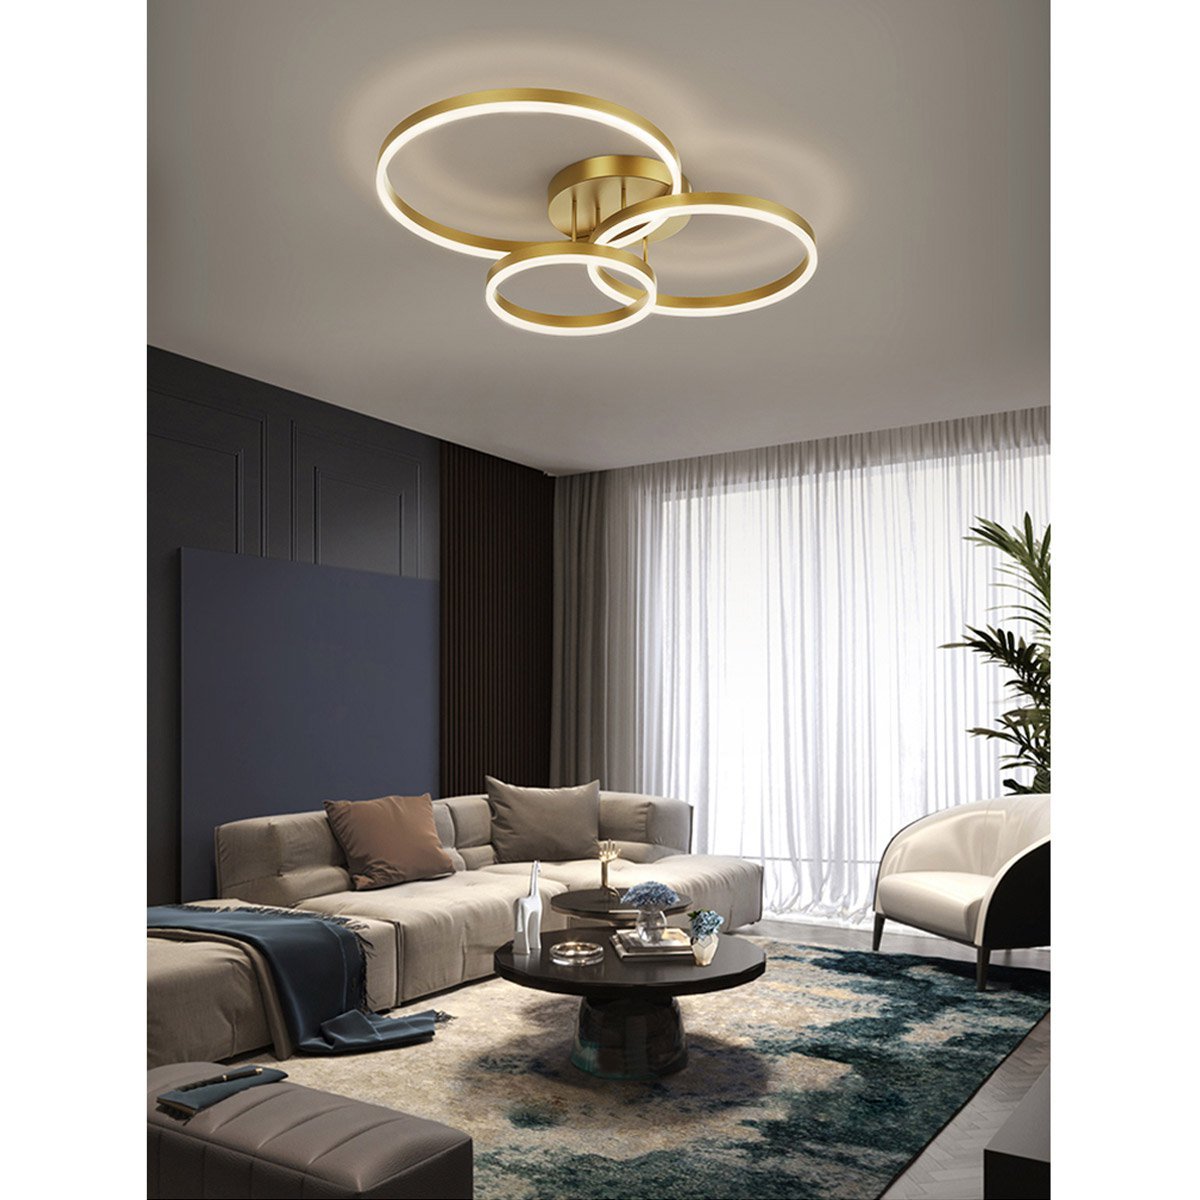 Lustre Led Luminaria 3 em 1 Arco Infinito Orbital Perfil Luxo Moderno Decorativo Sala Quarto Recepça - 4